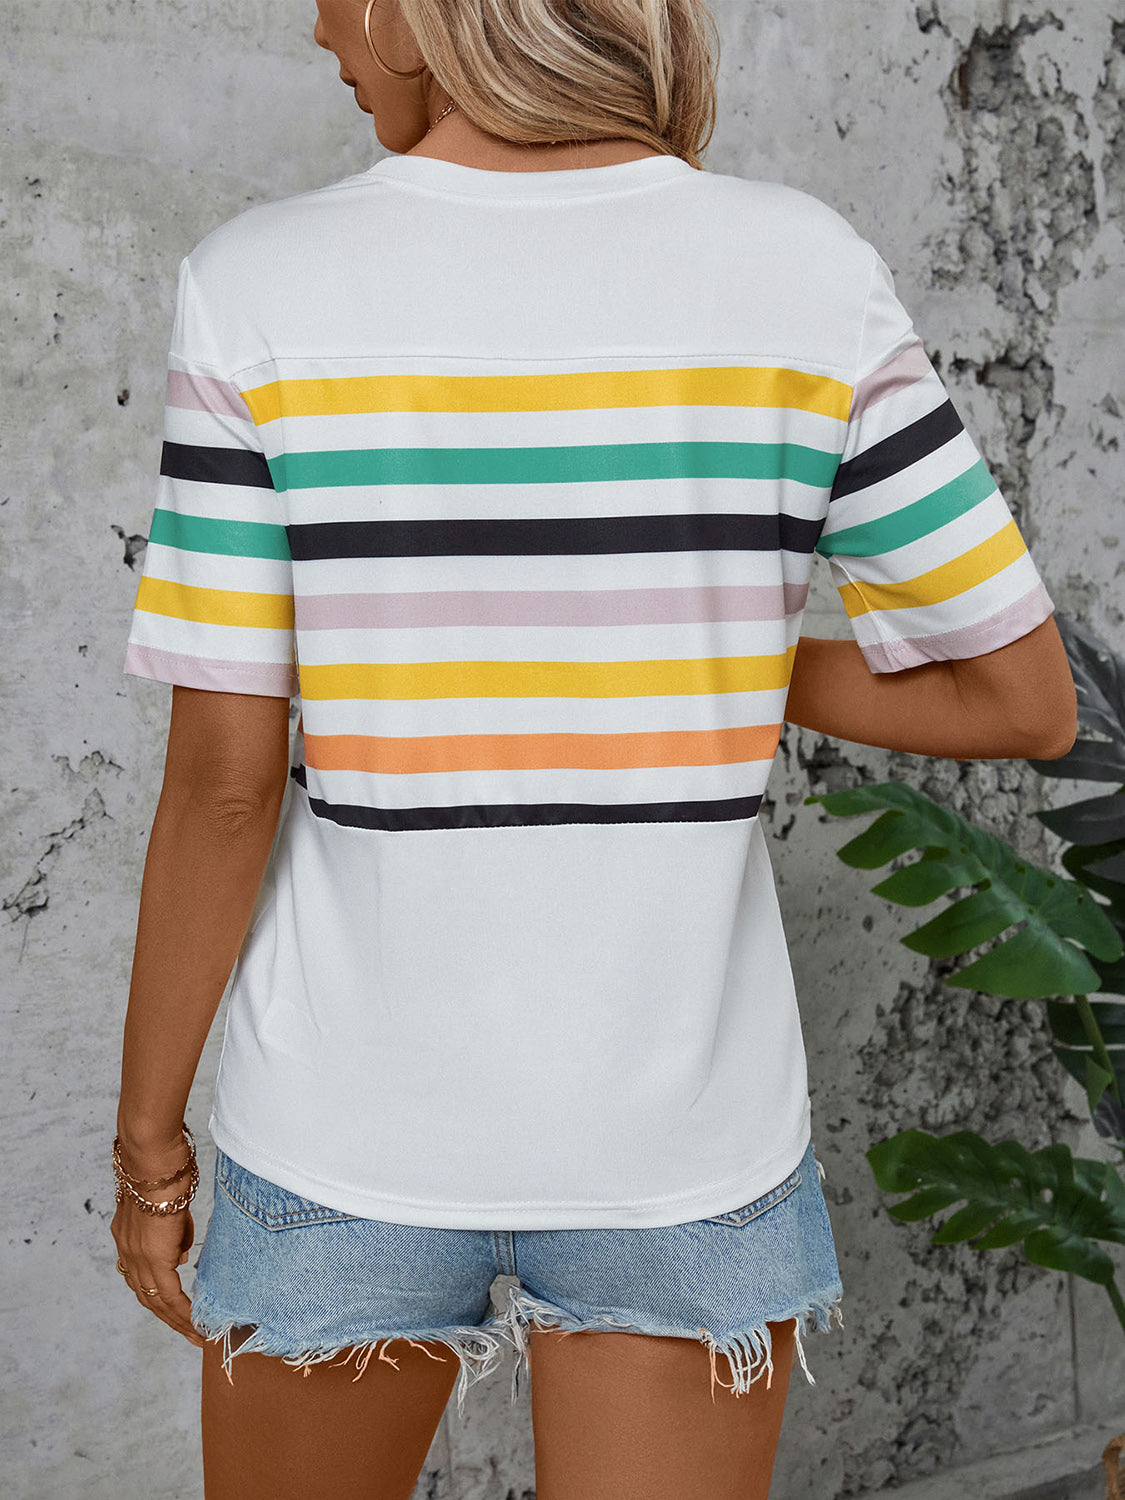 TEEK - White Striped Round Neck Short Sleeve T-Shirt TOPS TEEK Trend   